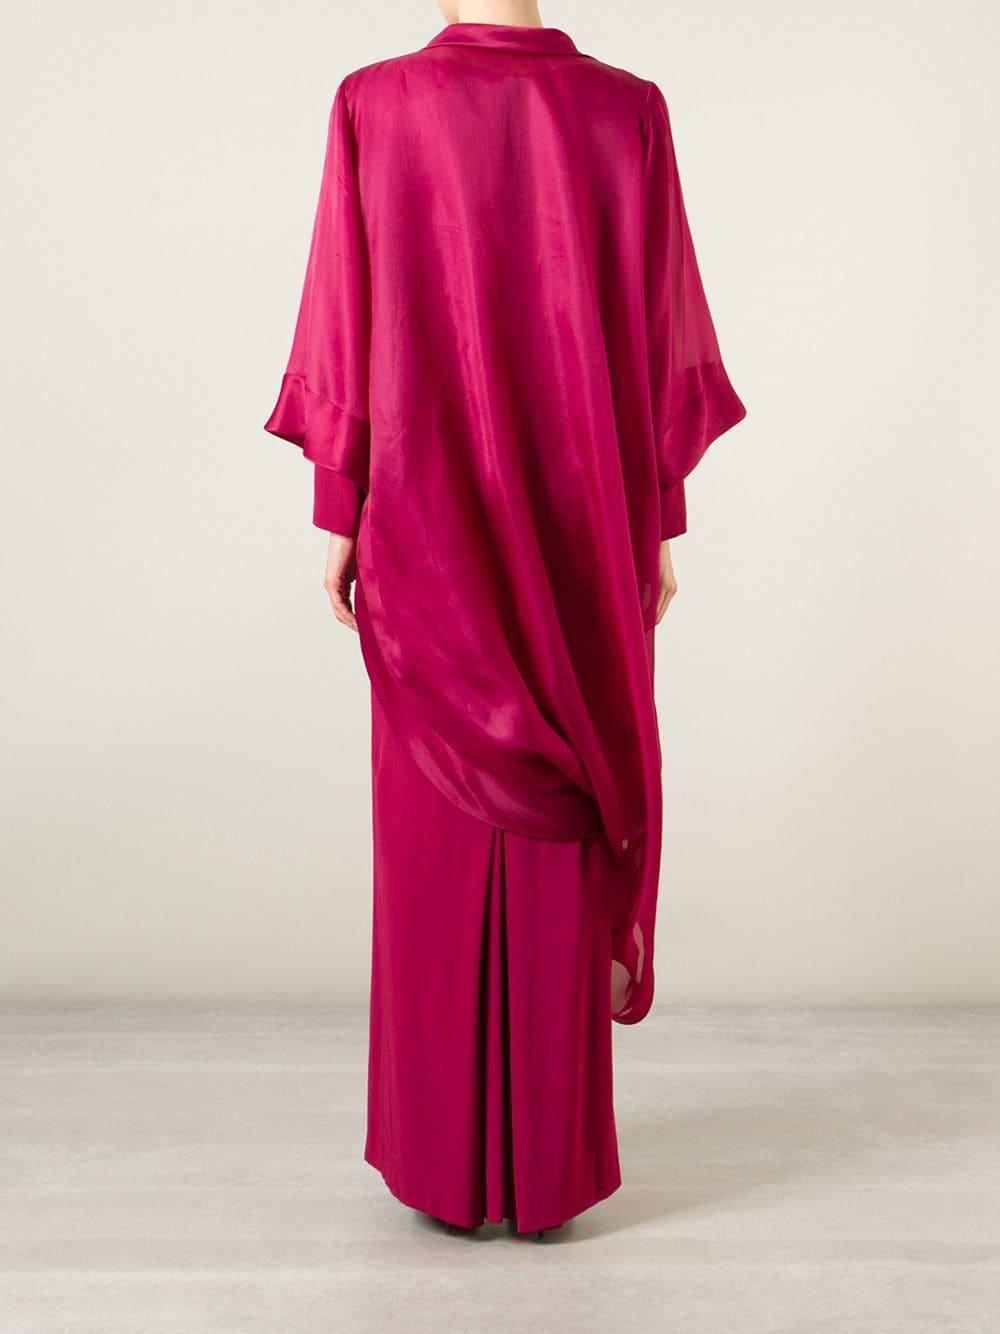 Red 1990s Givenchy Fuchsia Chiffon Long Dress